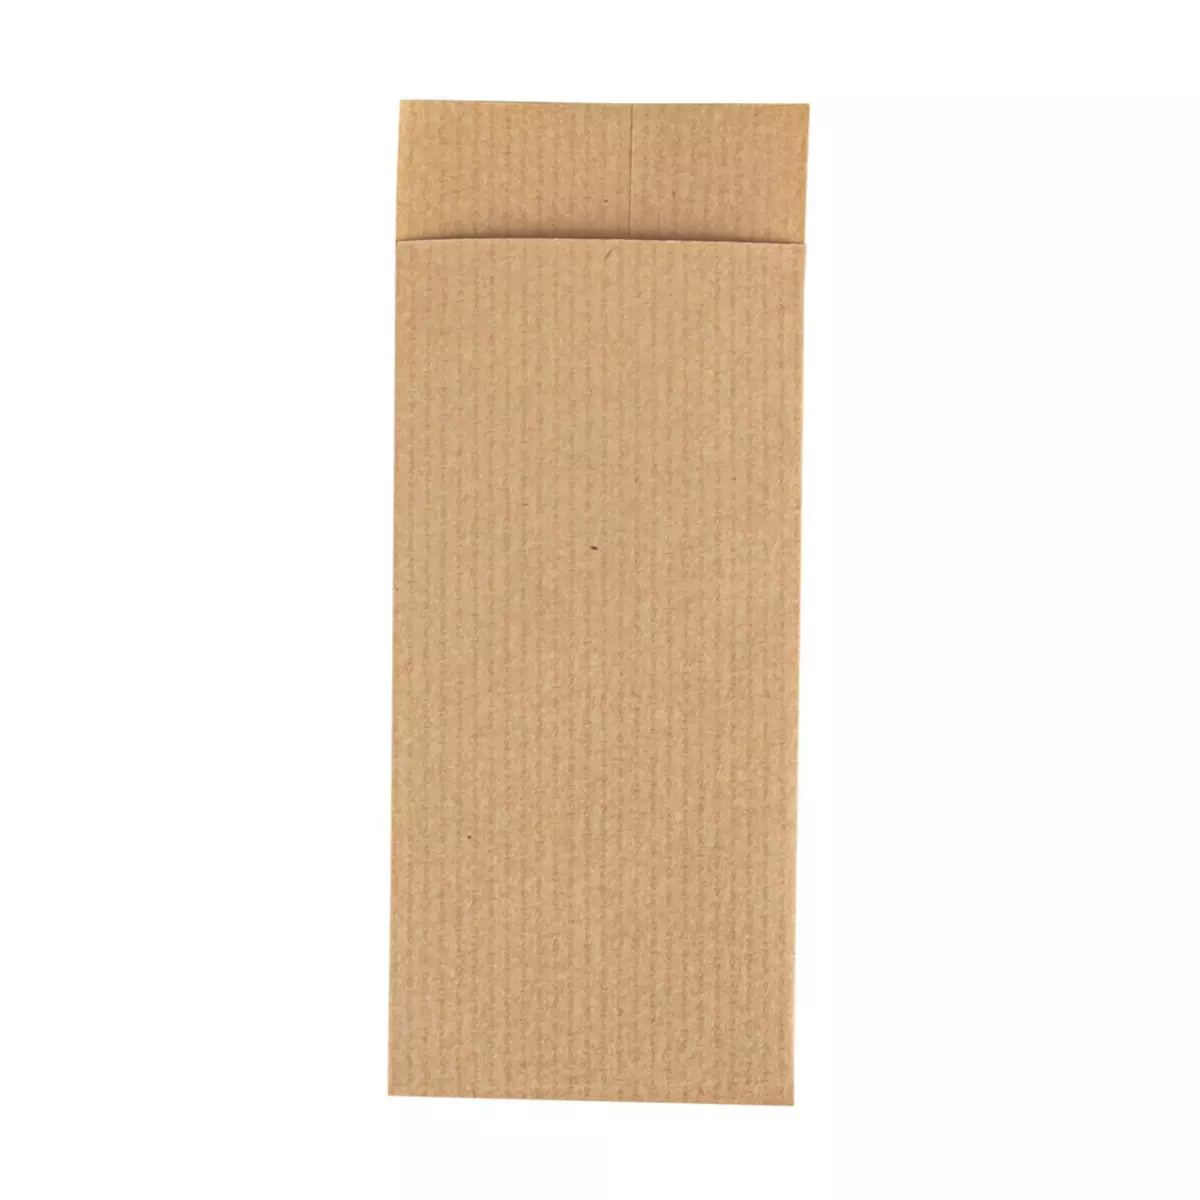 Rayher Mini - sac en papier, kraft, 5,3x11,5cm, 50 pces